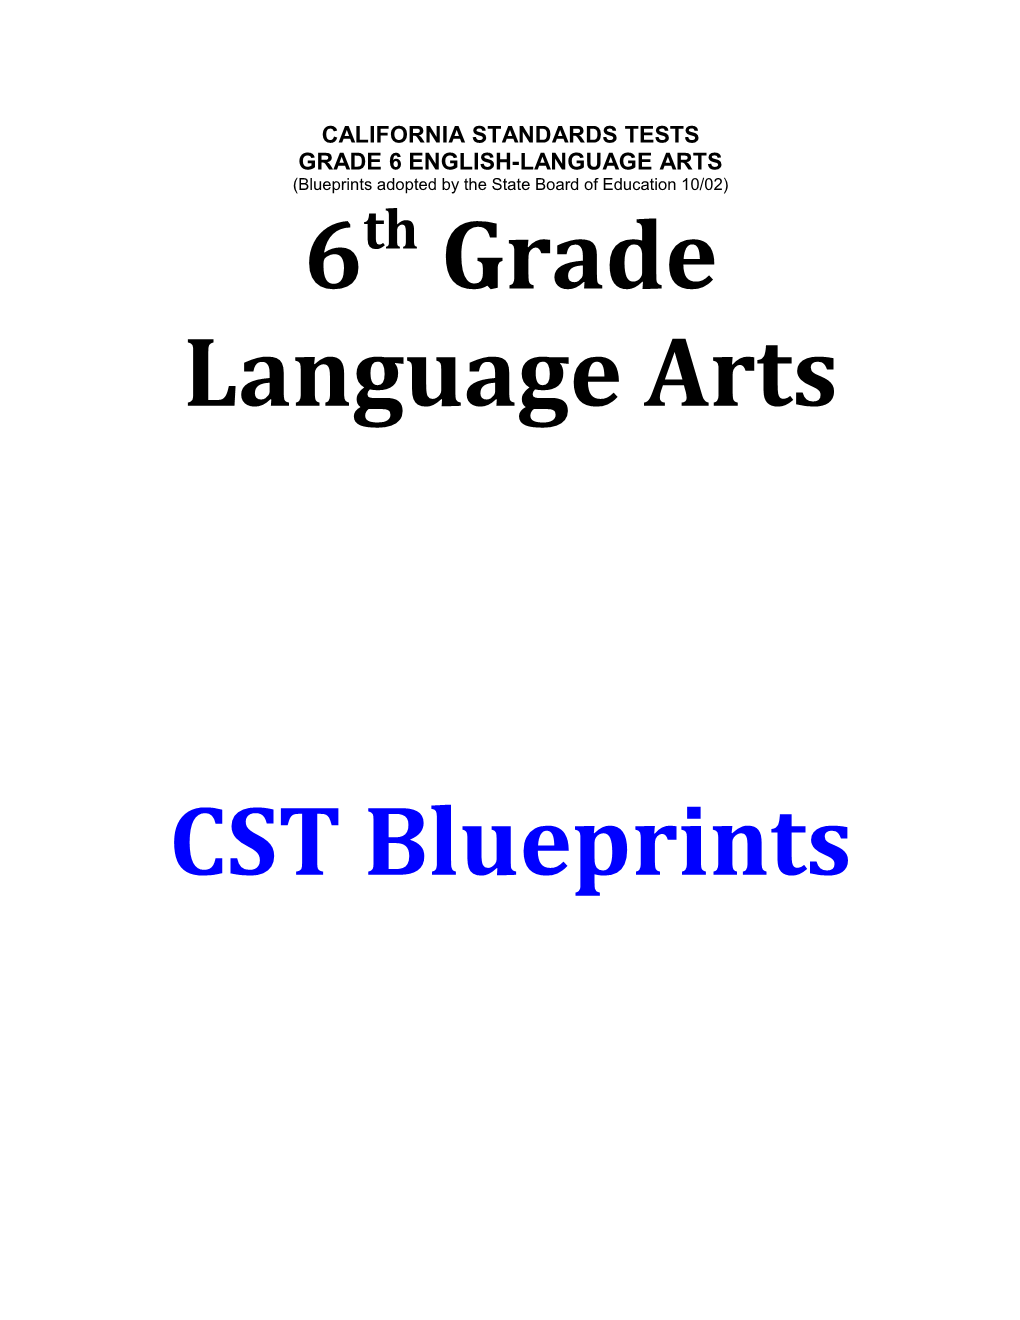 Grade 6 English-Language Arts s1